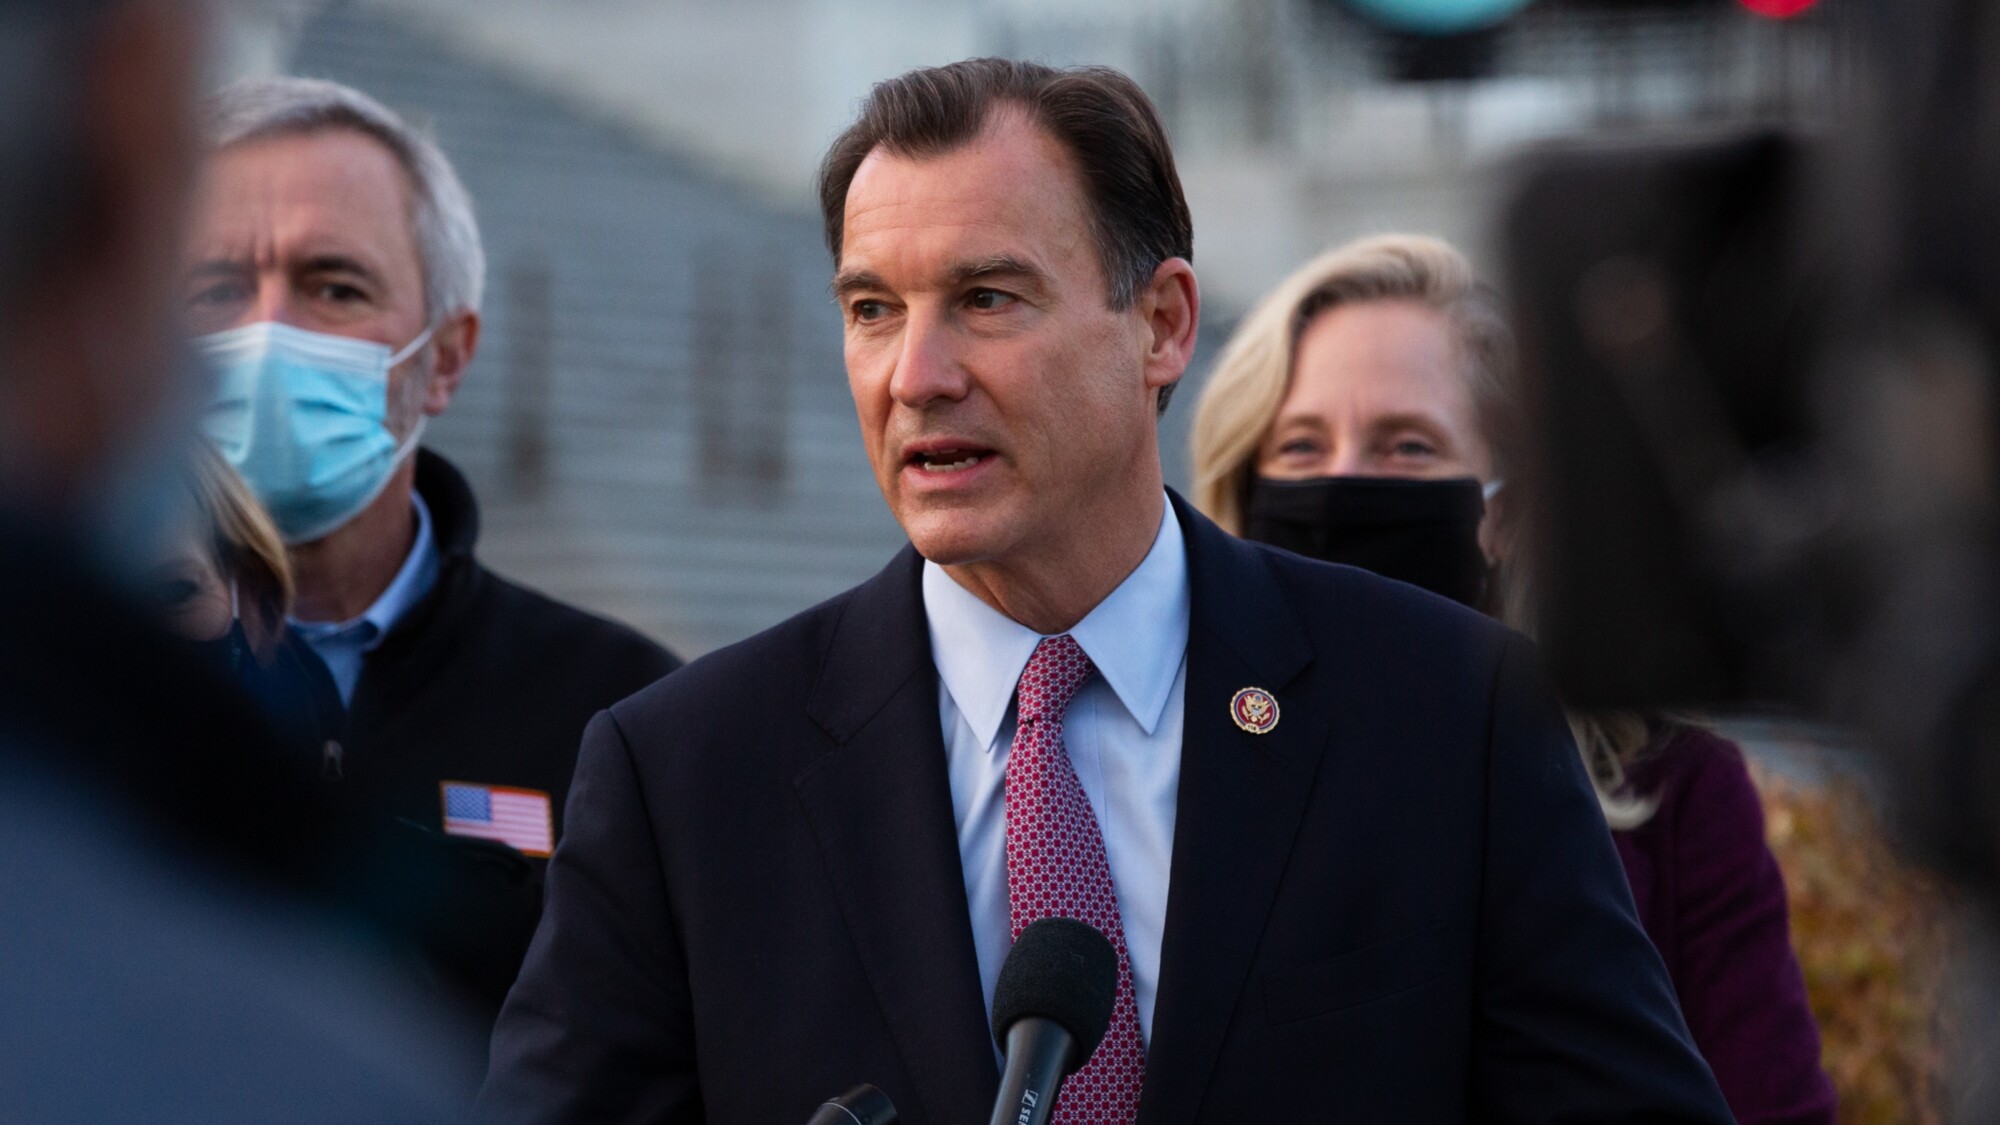 Congress Members Seek to Repeal Cap on Tax Deductions